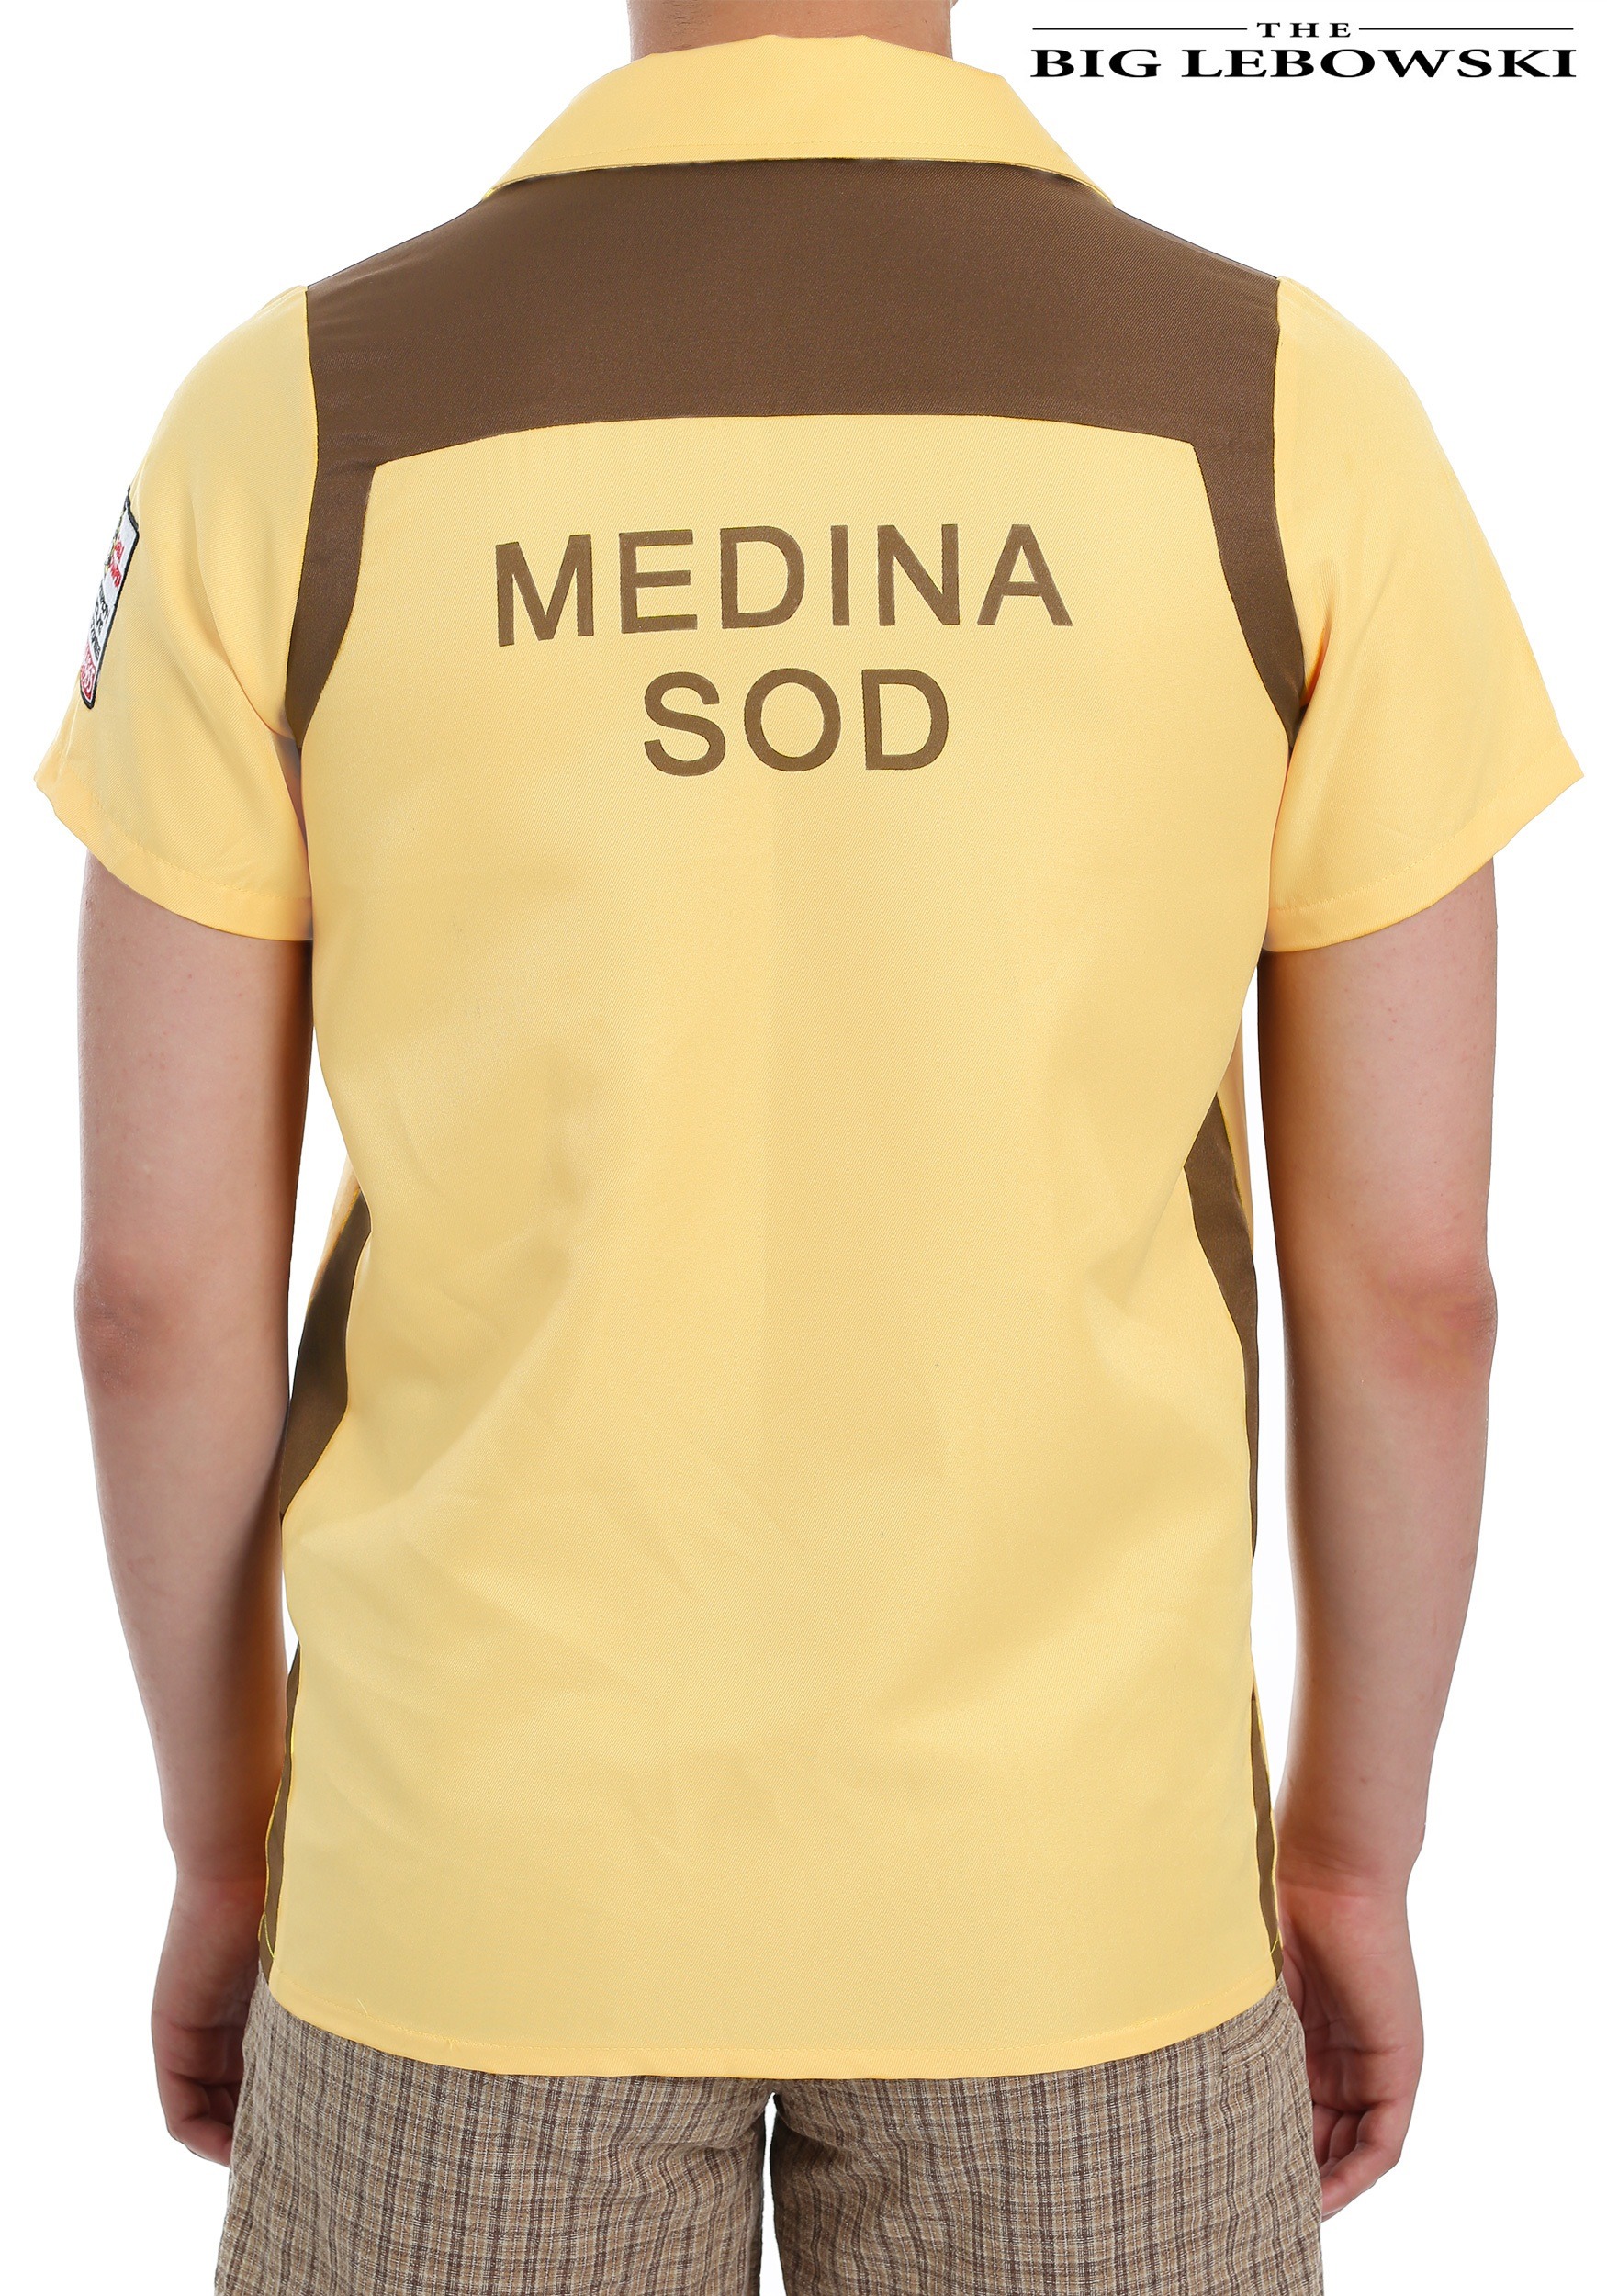 Plus Size Medina Sod Bowling Shirt Costume From Big Lebowski